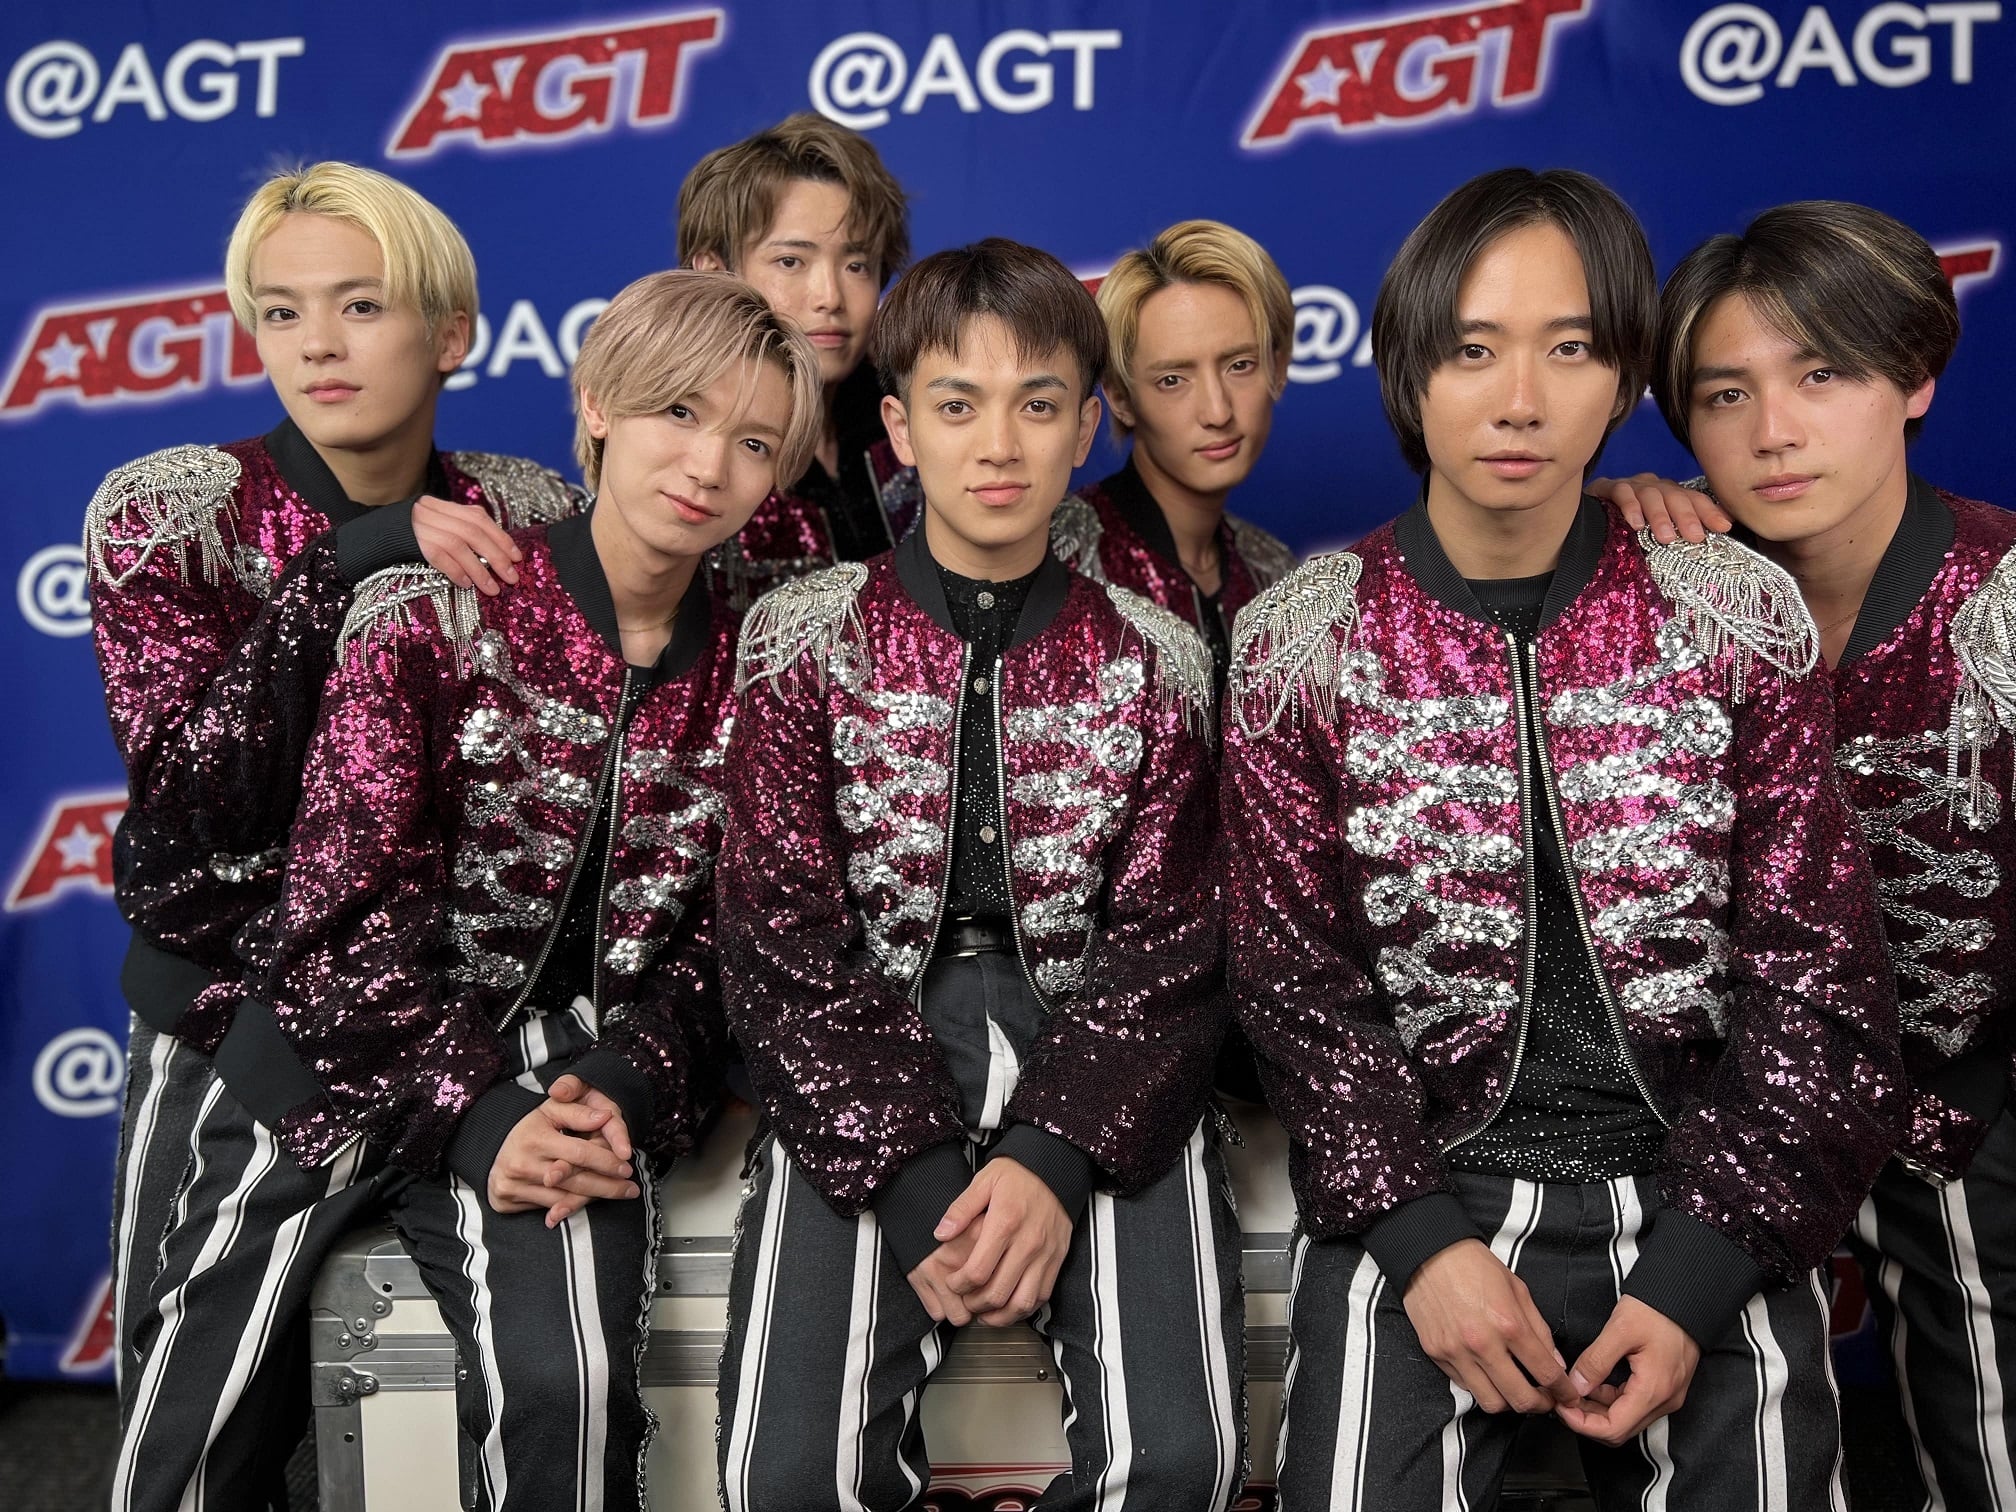 TRAVIS JAPAN Japanese Dance Group Lights Up America's Got Talent